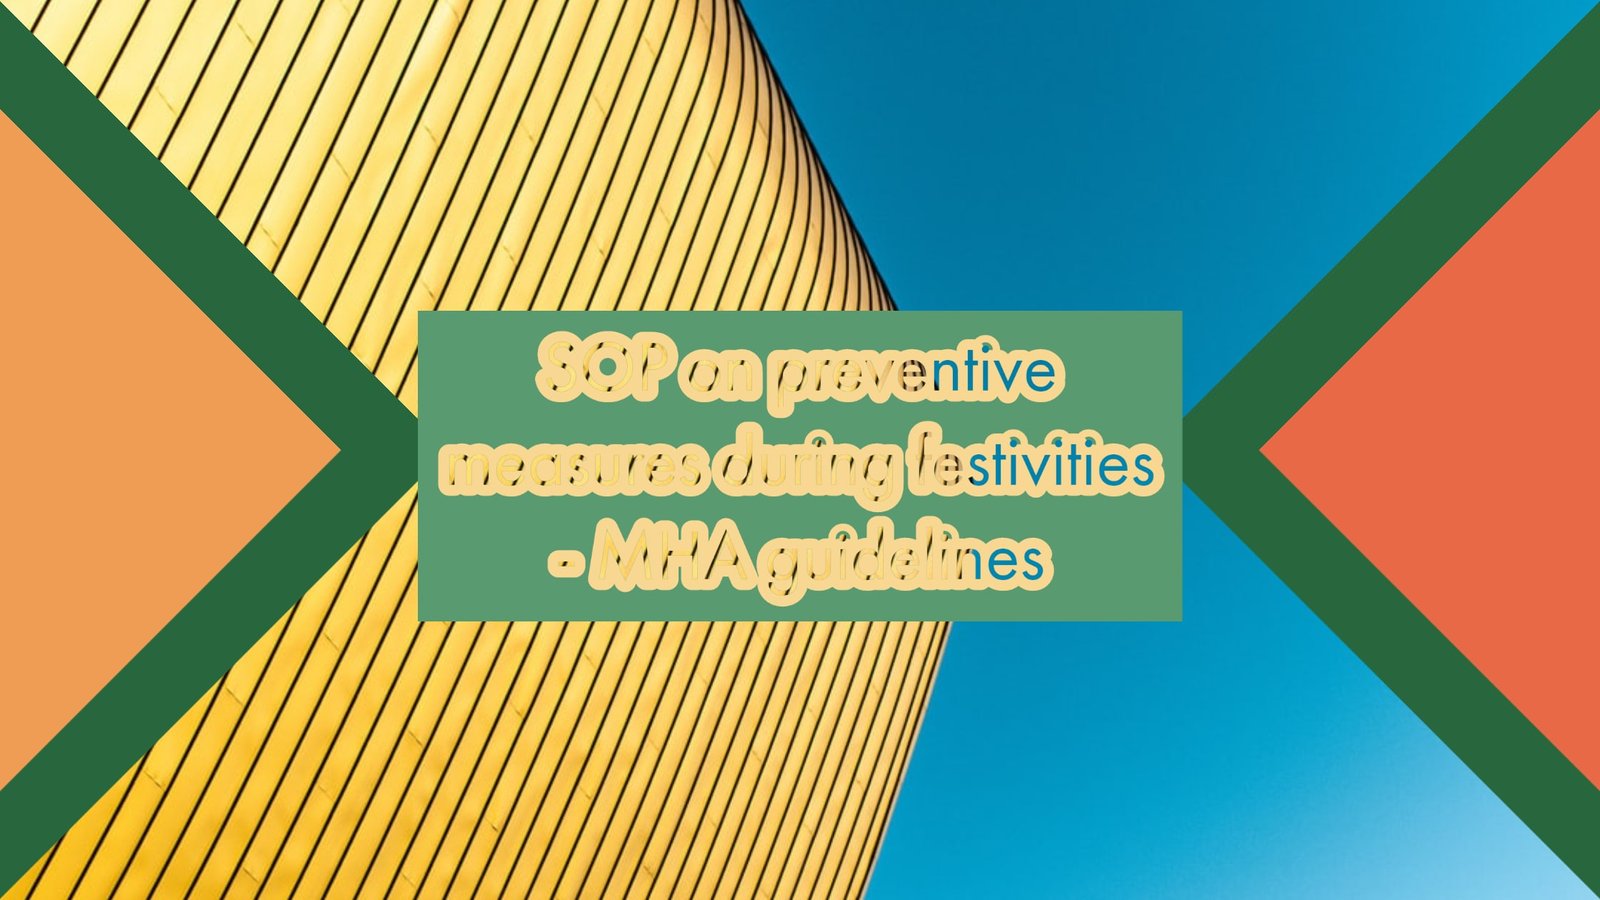 SOP on preventive measures during festivities - MHA guidelines